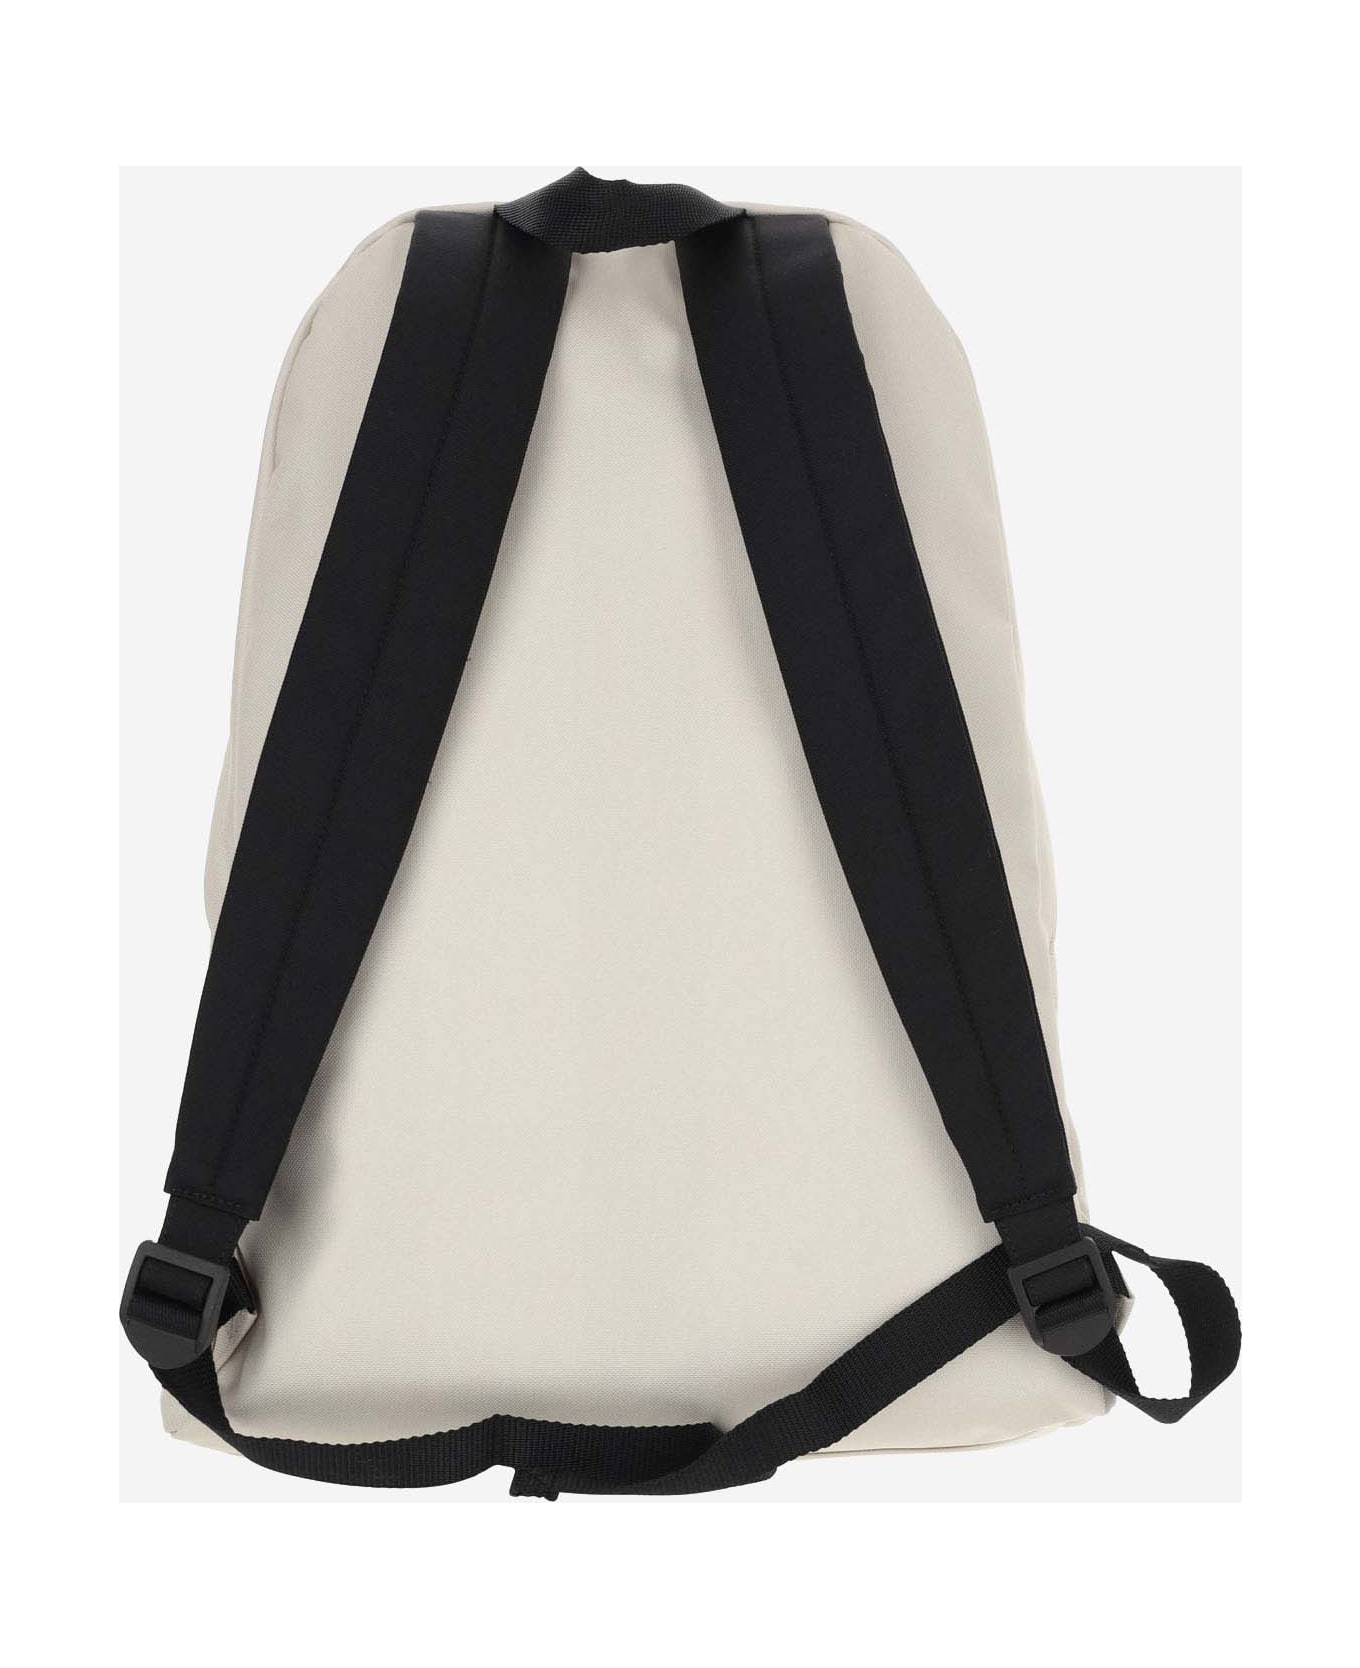 Balenciaga Explorer Backpack - Beige